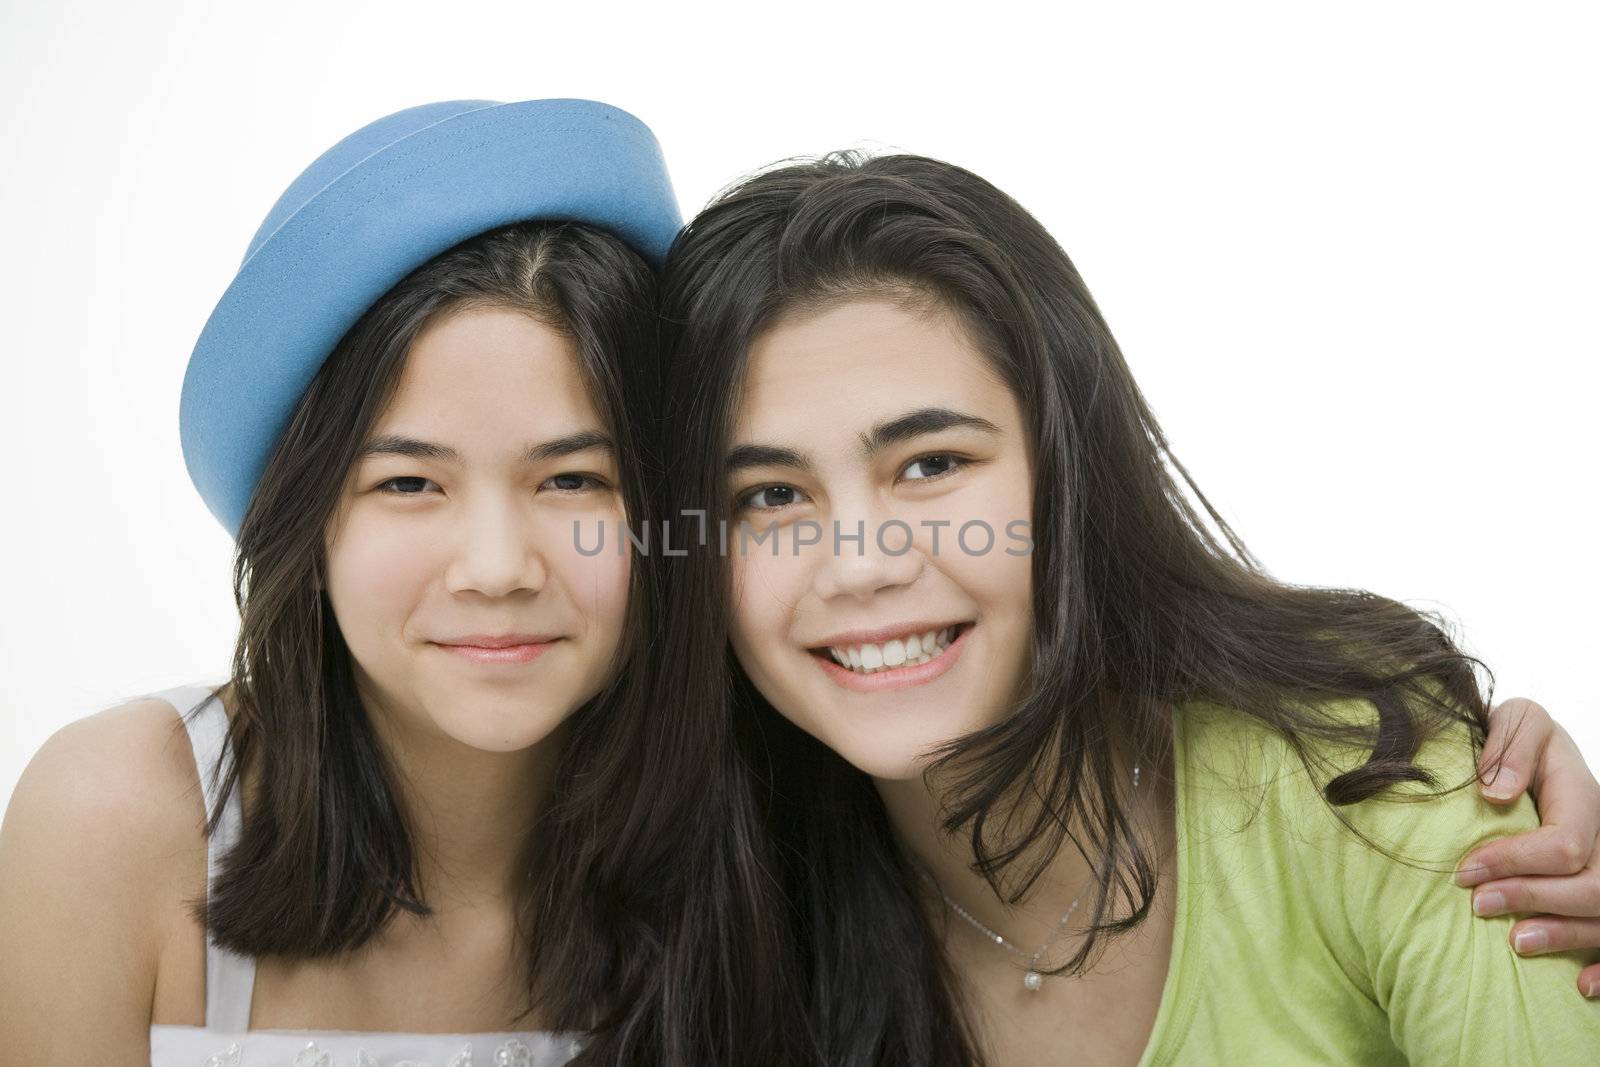 Two teen girls smiling together, hugging.